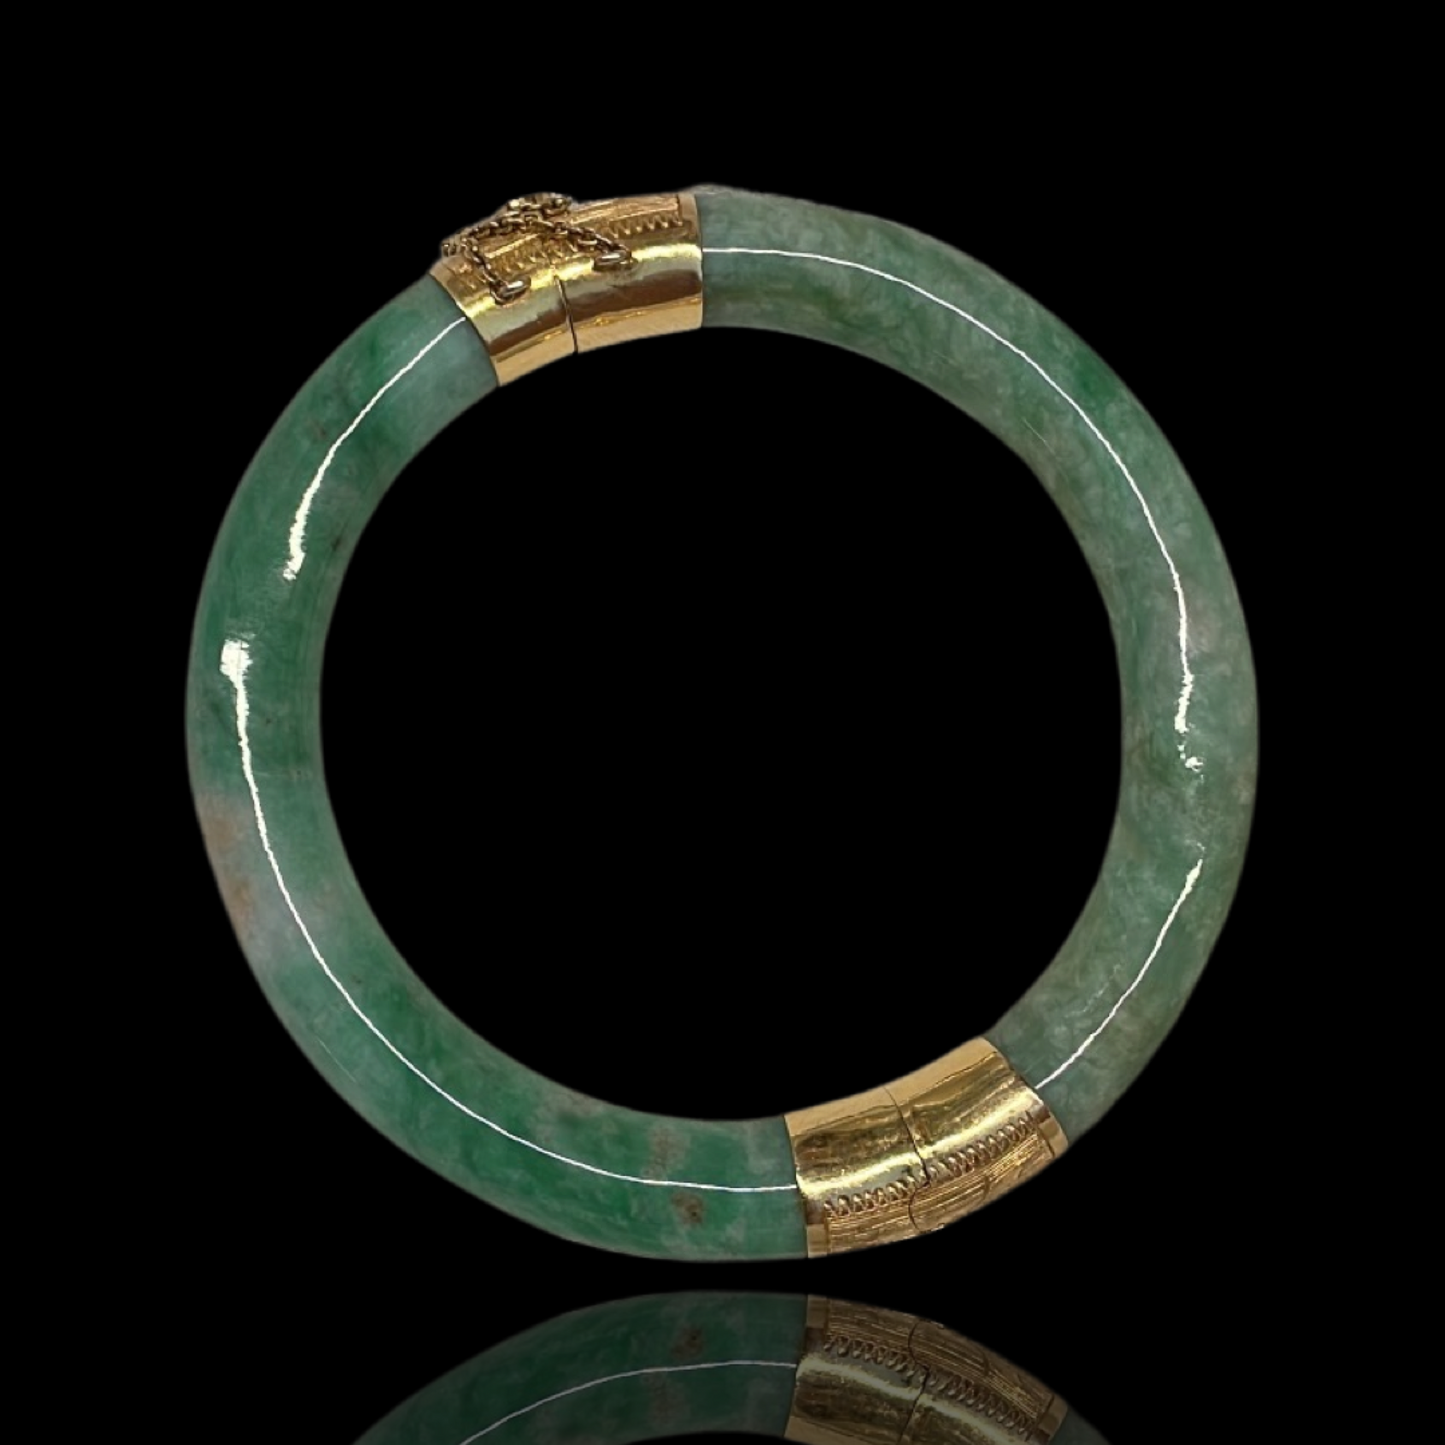 Jadeite and gold bracelet